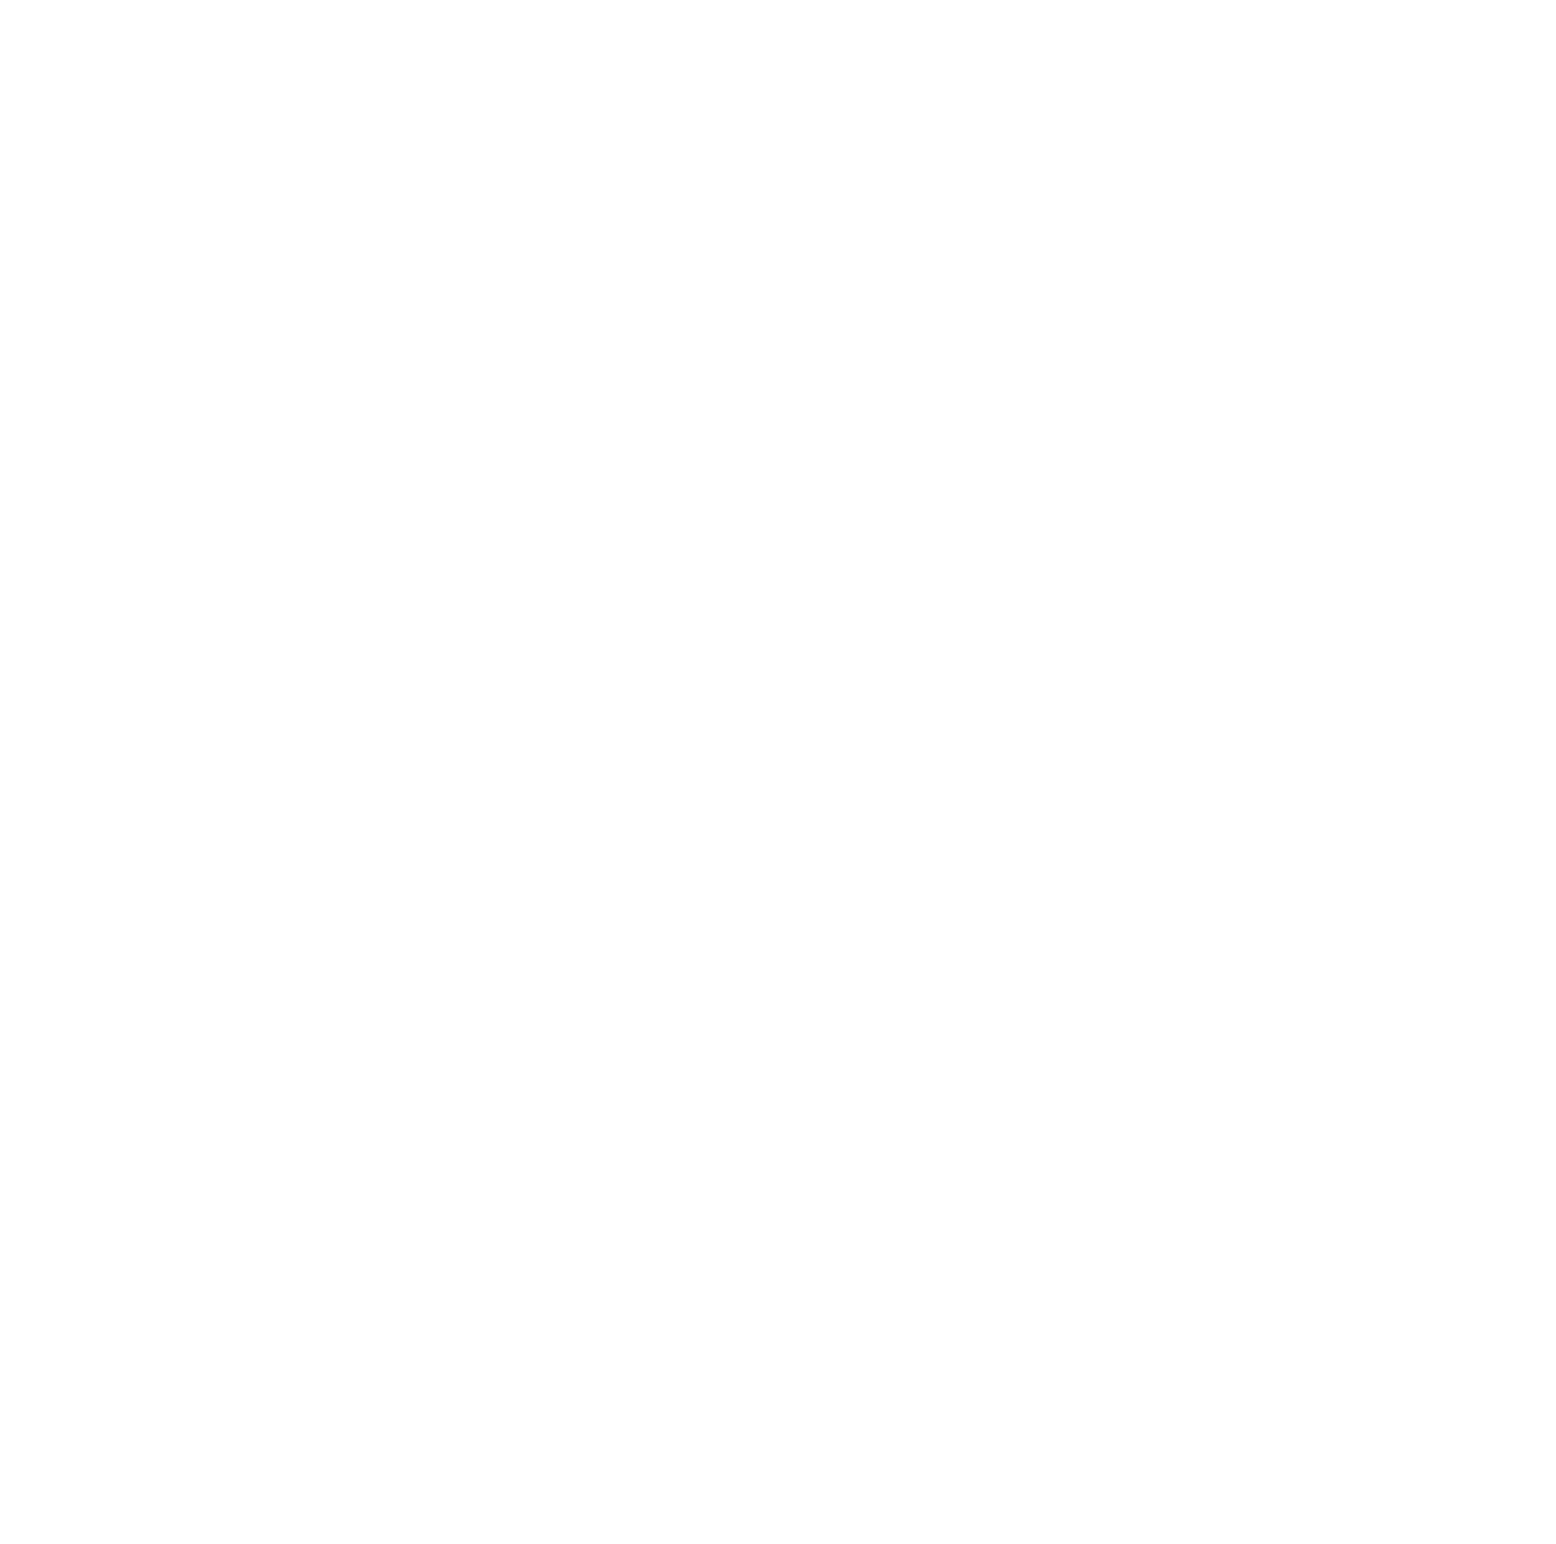 Lumi Rental Company logo pour fonds sombres (PNG transparent)